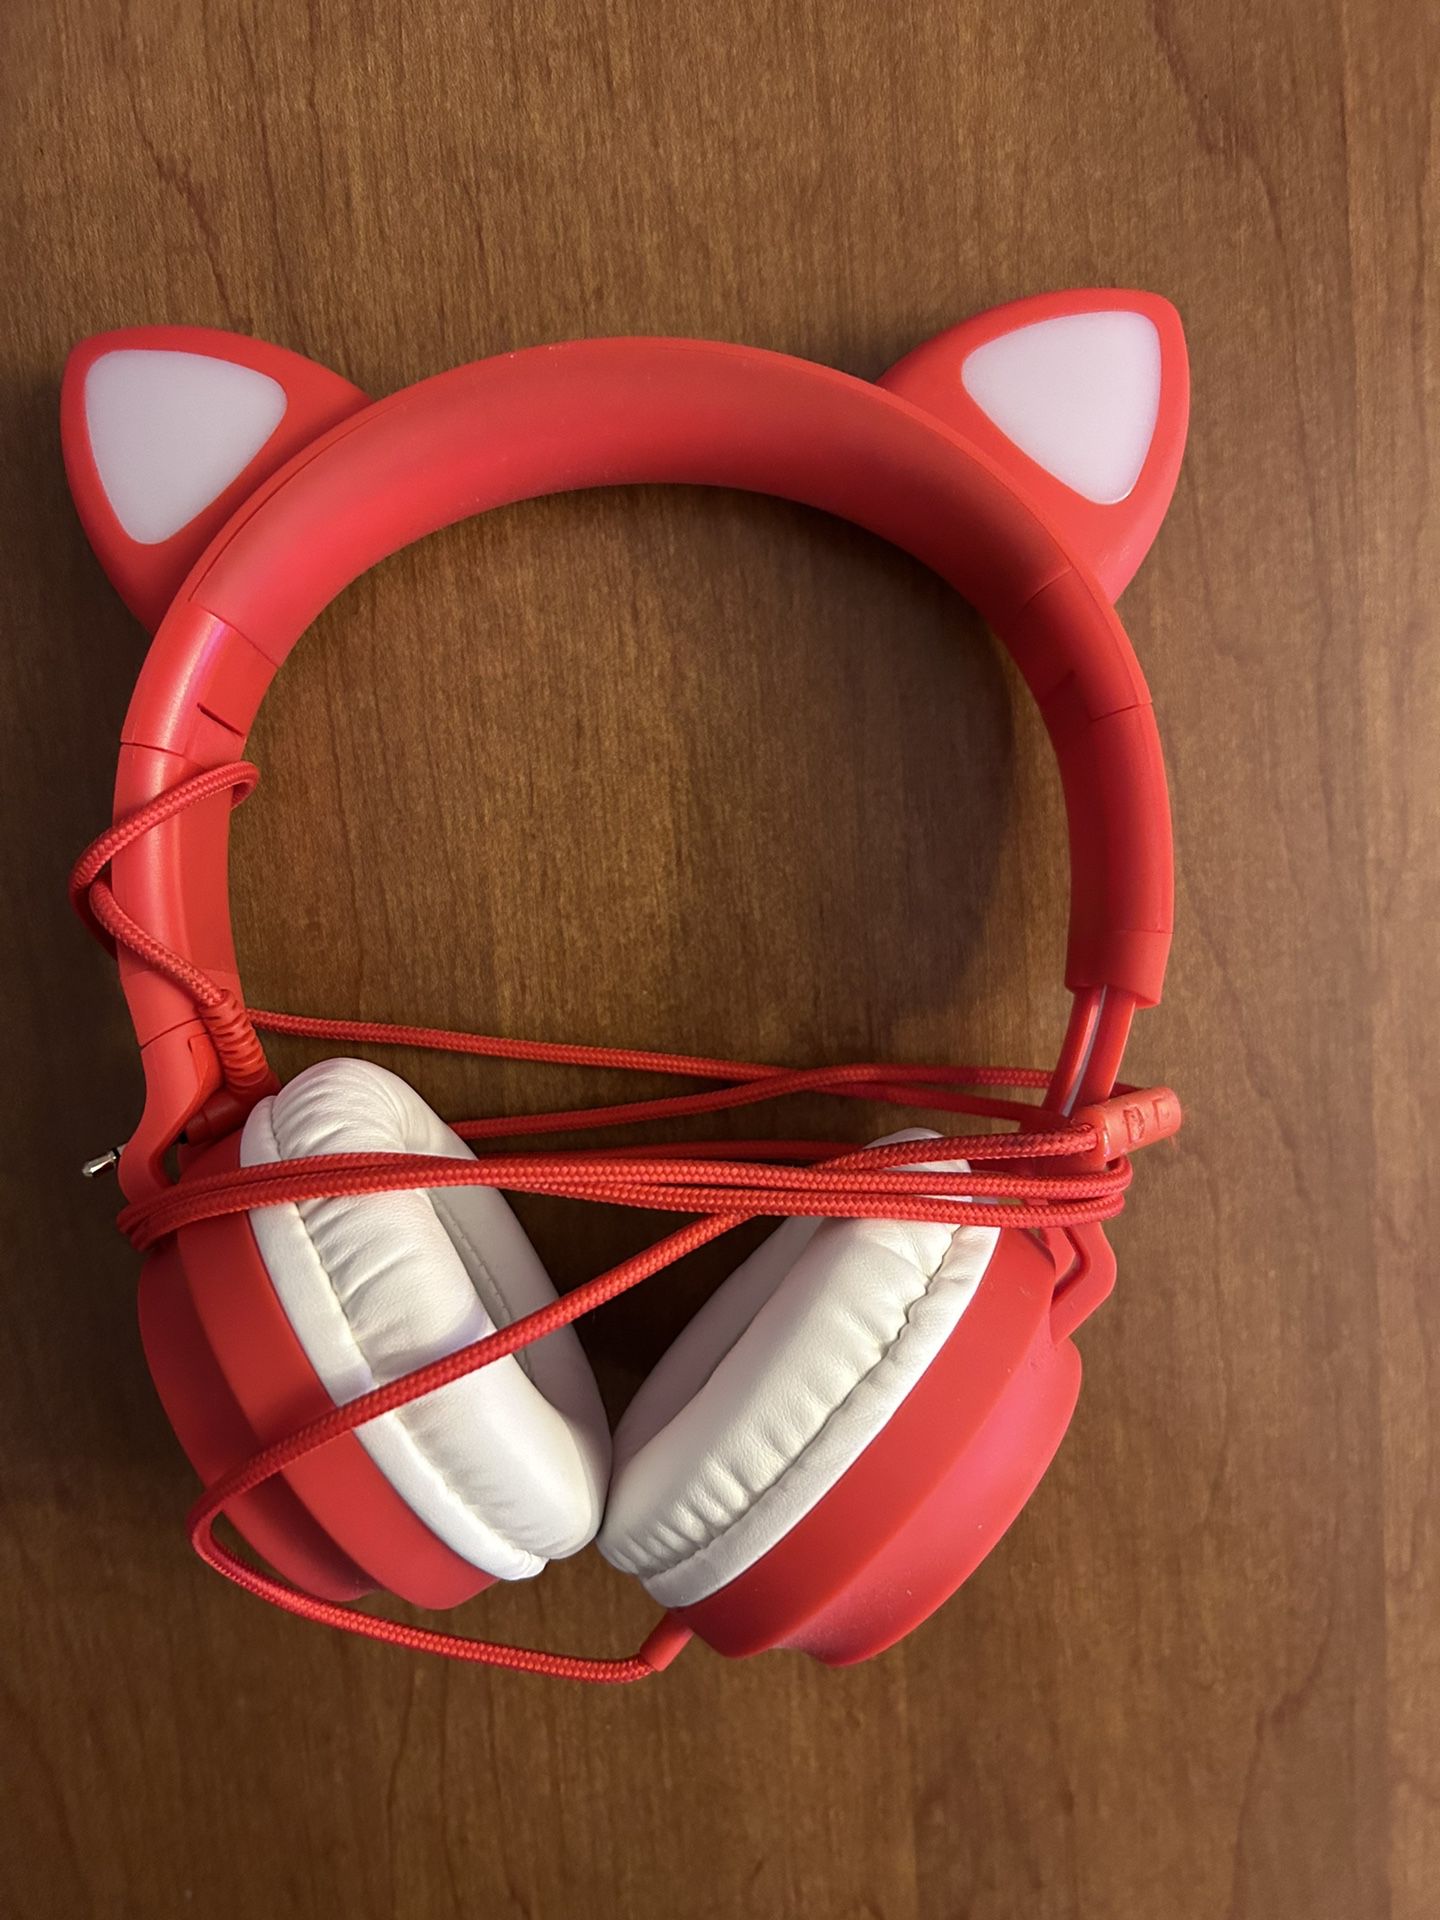 Disney Turning Red Headphones 